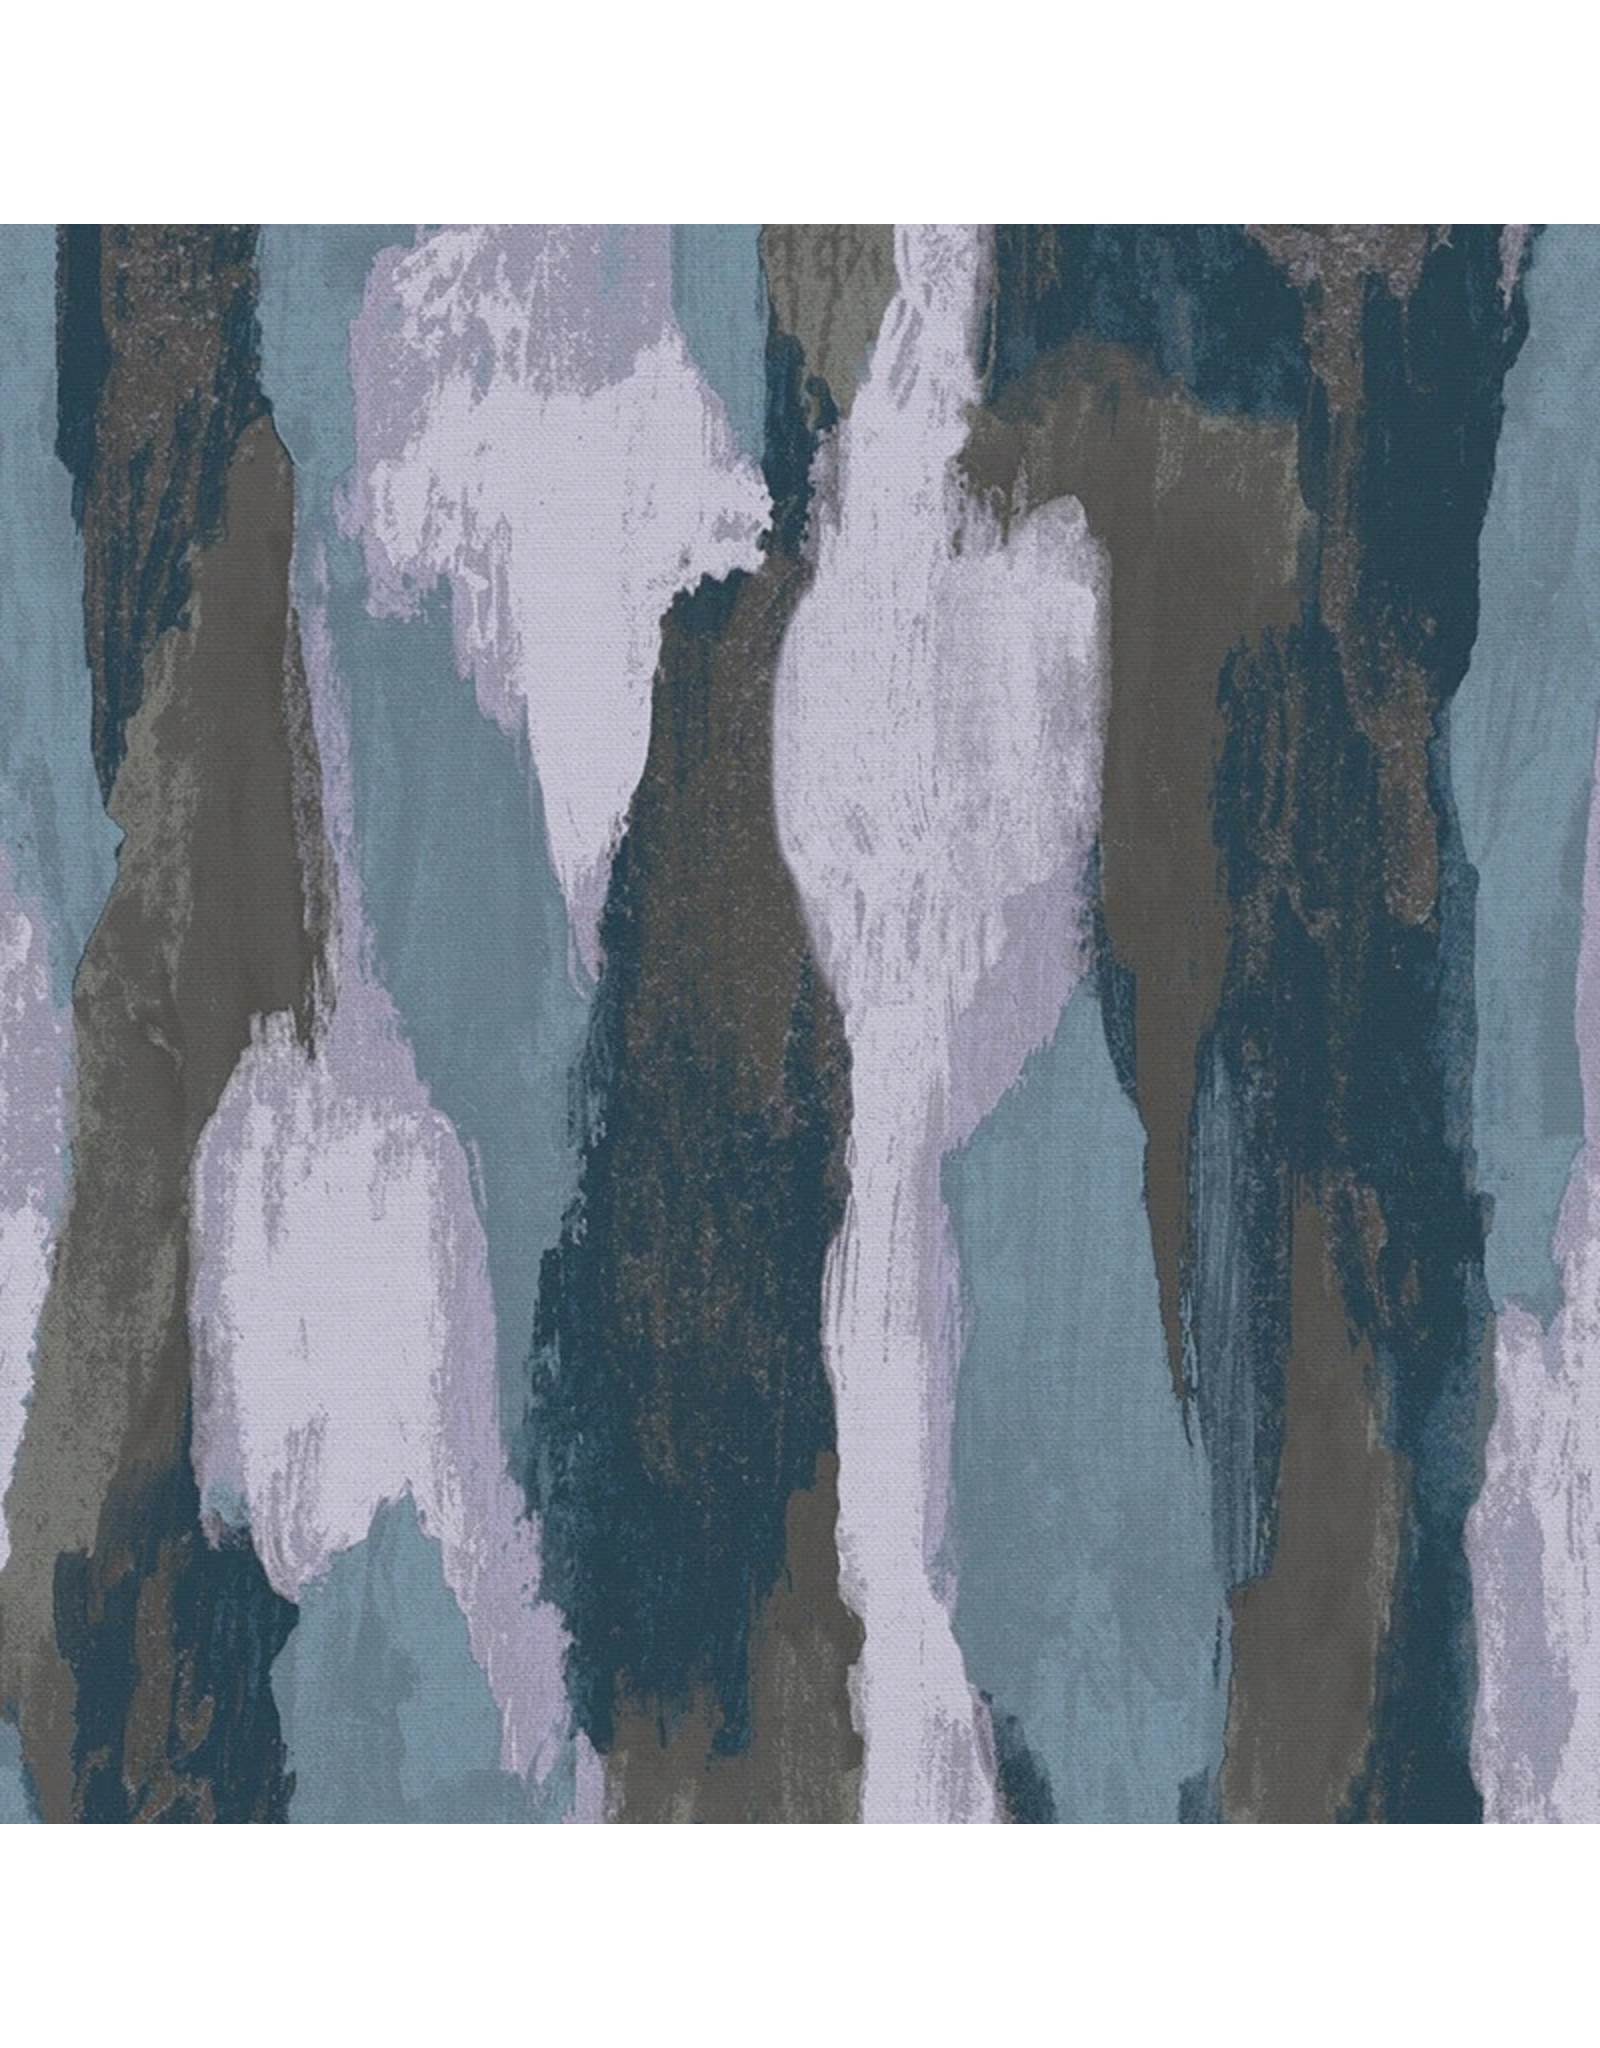 Paintbrush Studio Flow - Gray and Lavender, Fabric Half-Yards